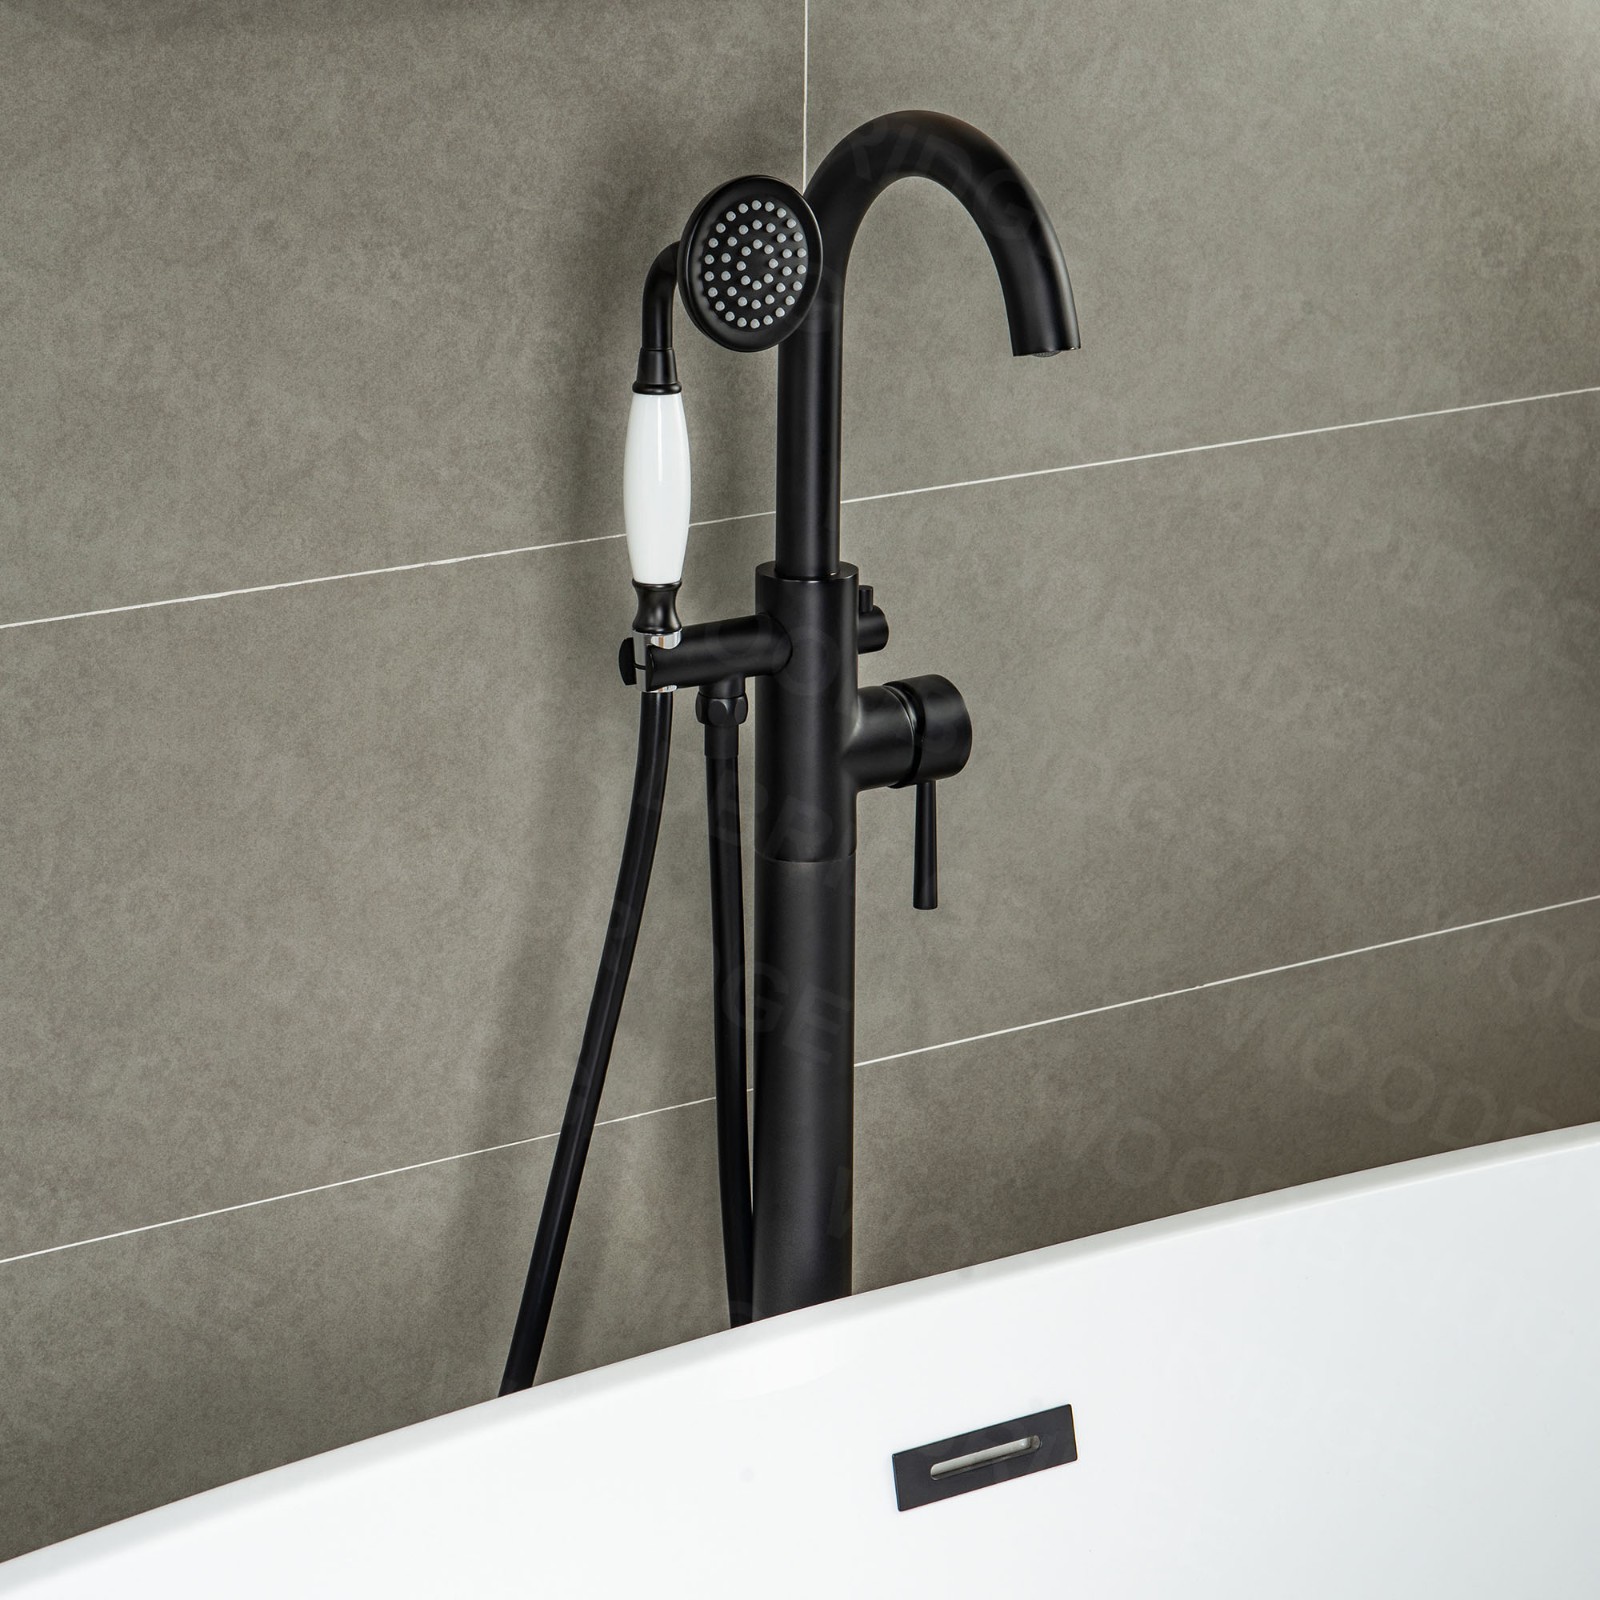  WOODBRIDGE F0025MBVT Fusion Single Handle Floor Mount Freestanding Tub Filler Faucet with Telephone Hand shower in Matte Black Finish._5263